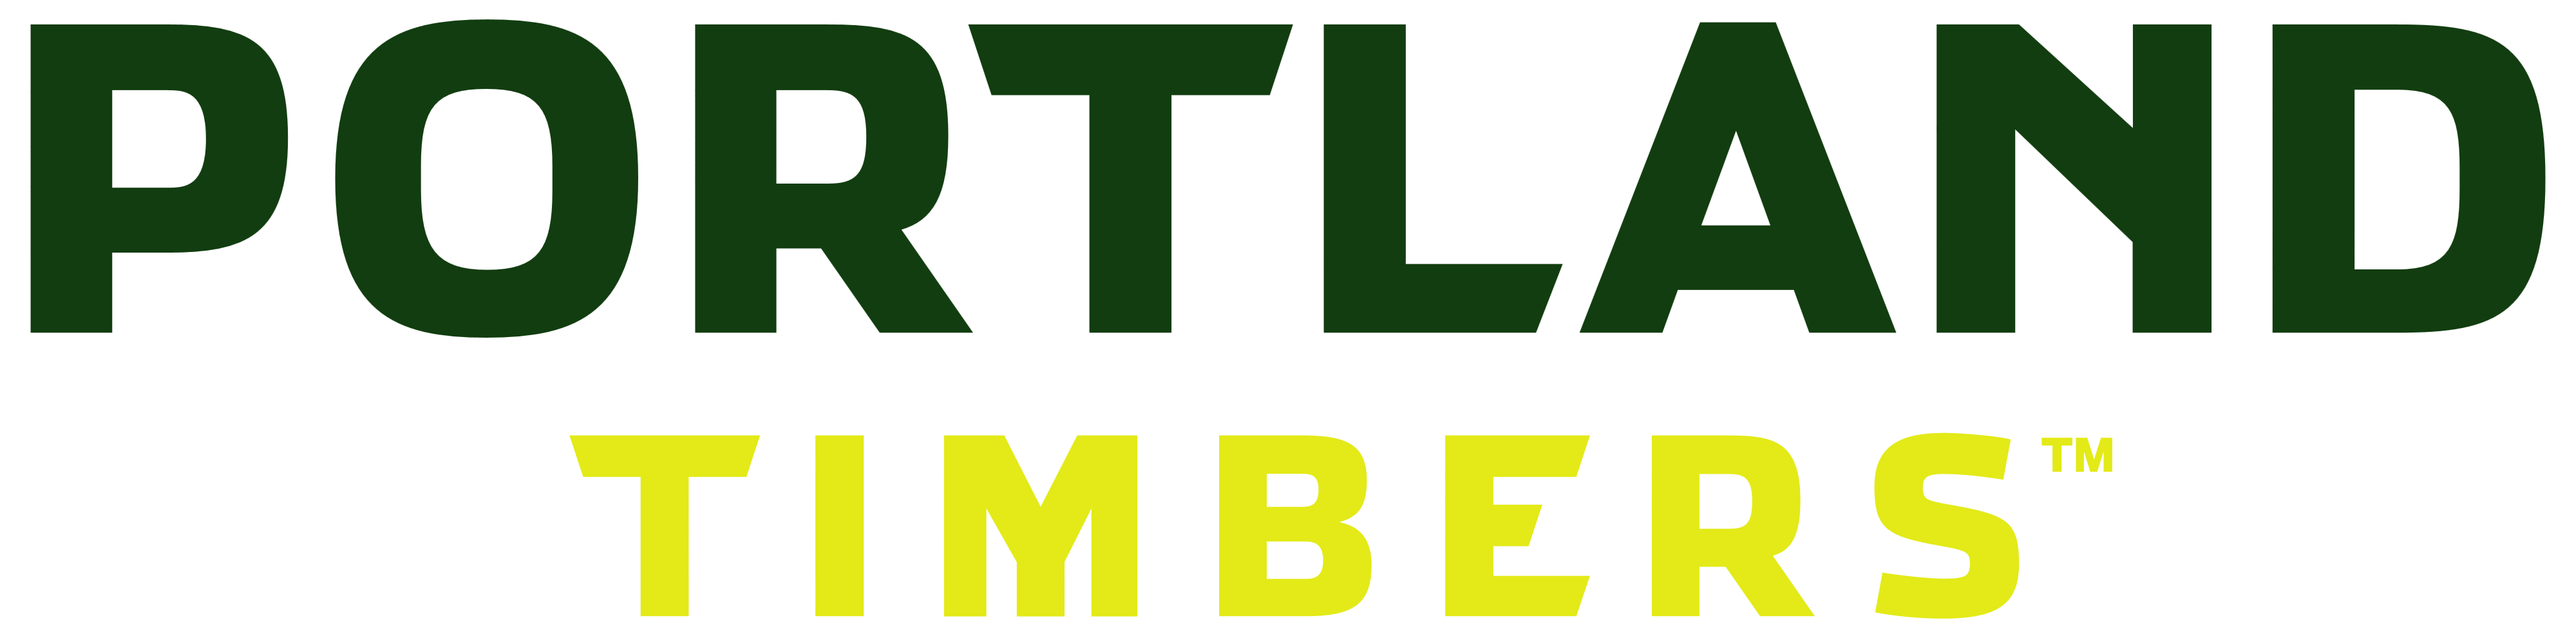 Portland Timbers Logo PNG - 106318